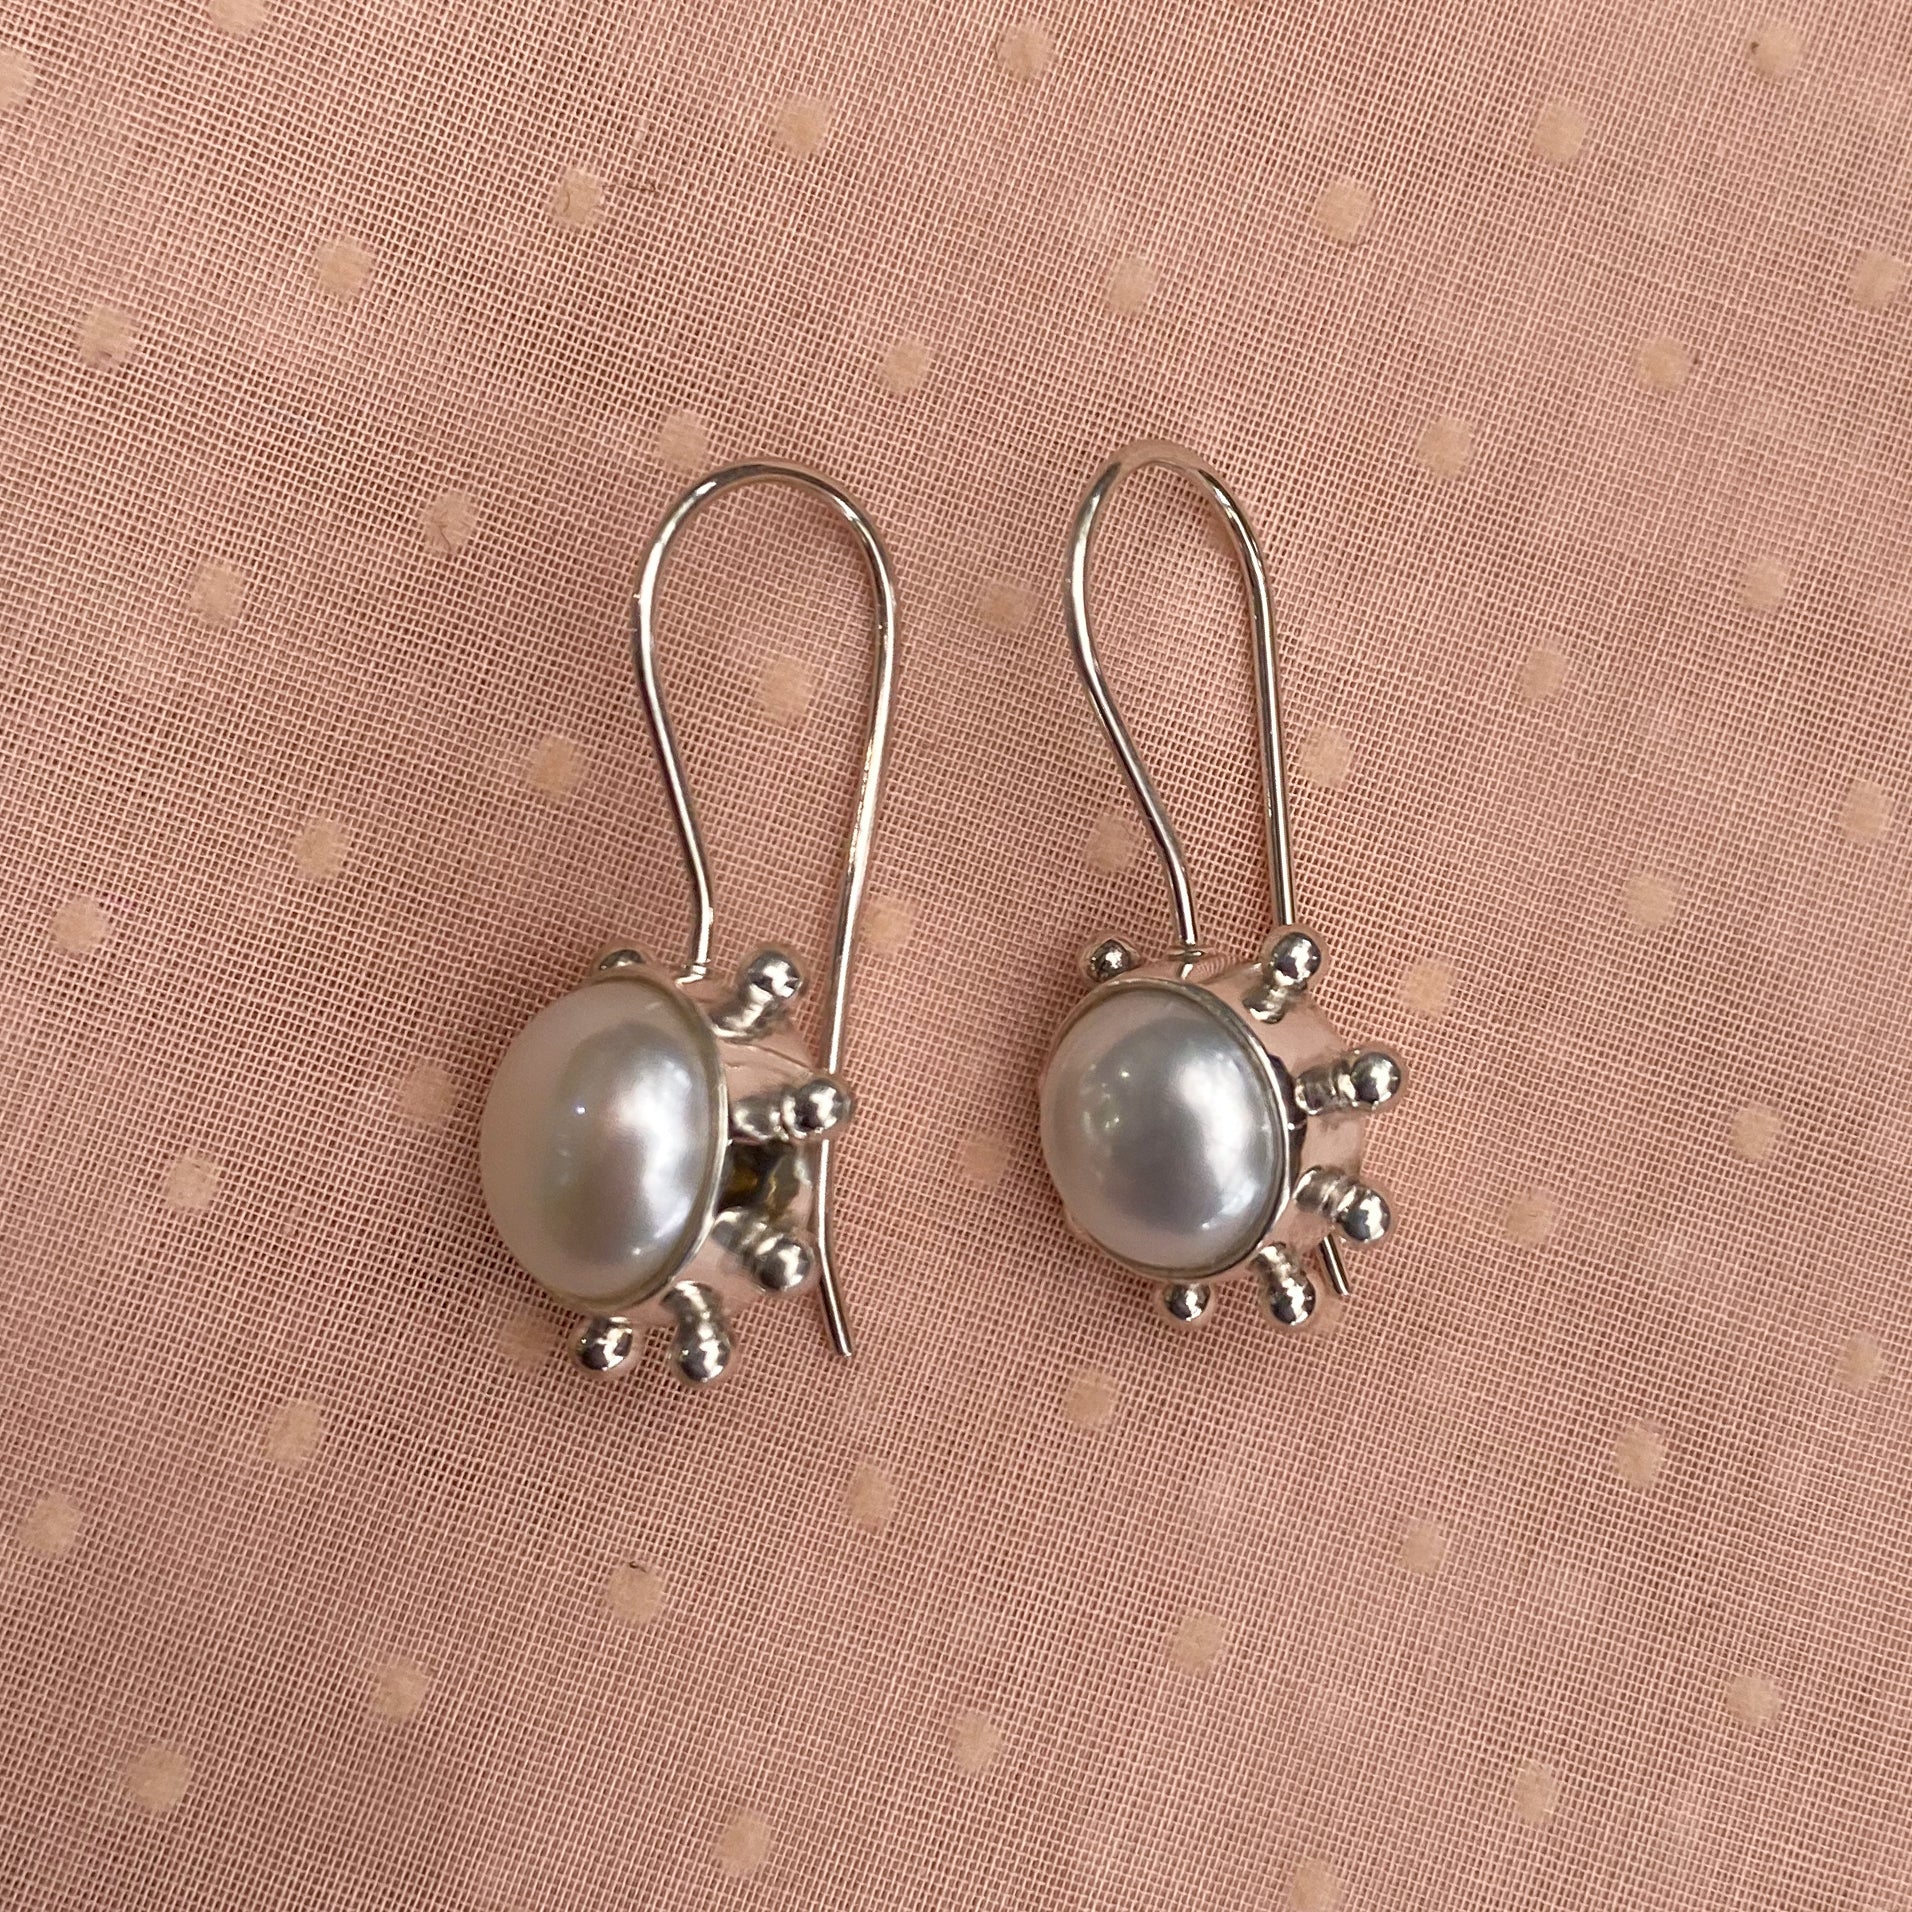 Decorative Single Pearl Drop Earring